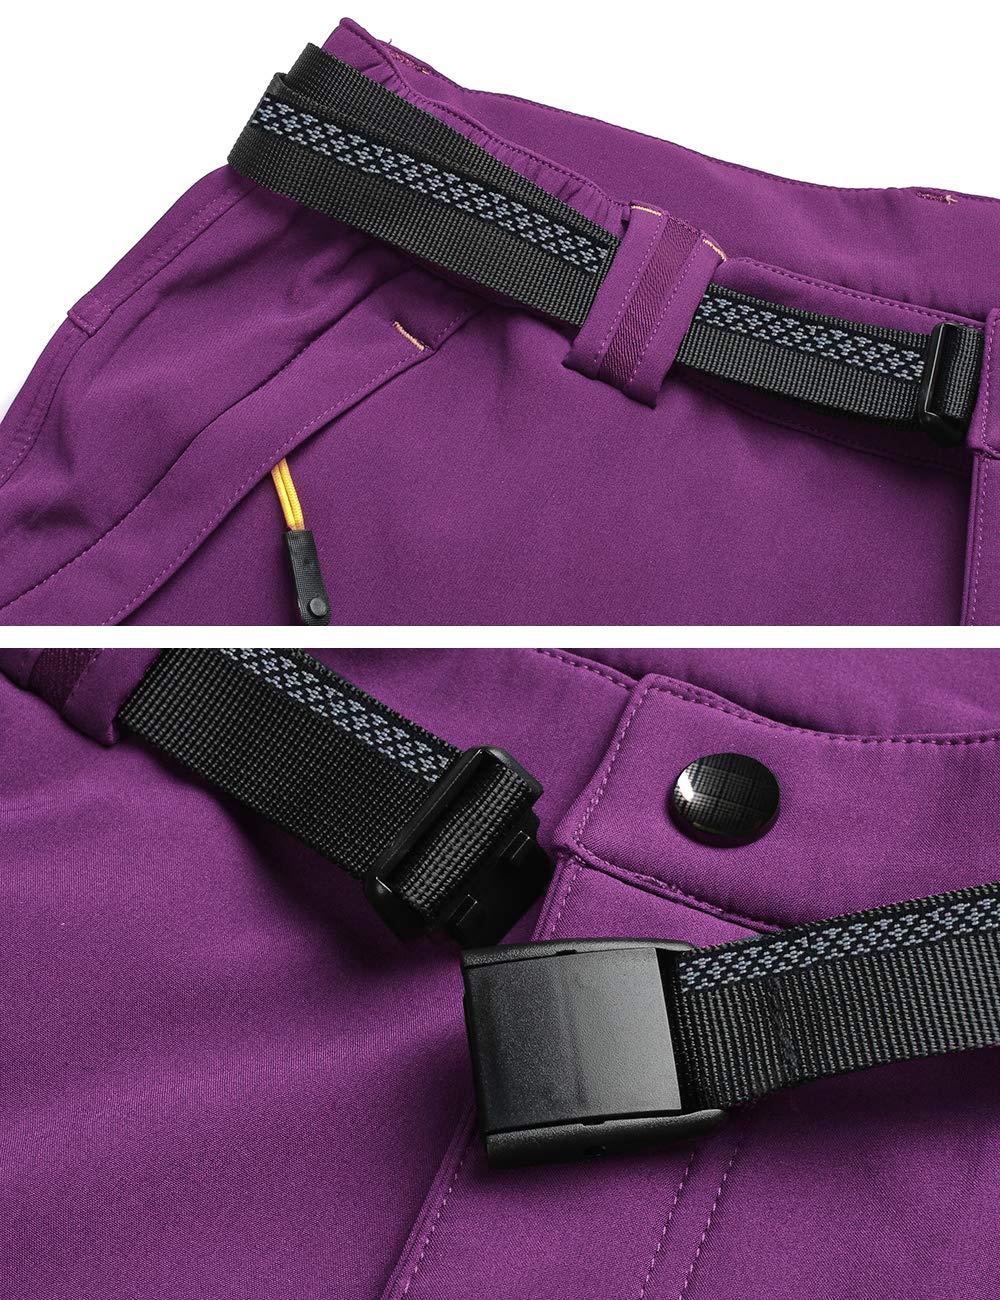 MAGCOMSEN Women's Fleece Lined Softshell Pants Winter Sports Snow Ski Hiking Pants with Multi-Pockets (Purple, 30W x 30L)